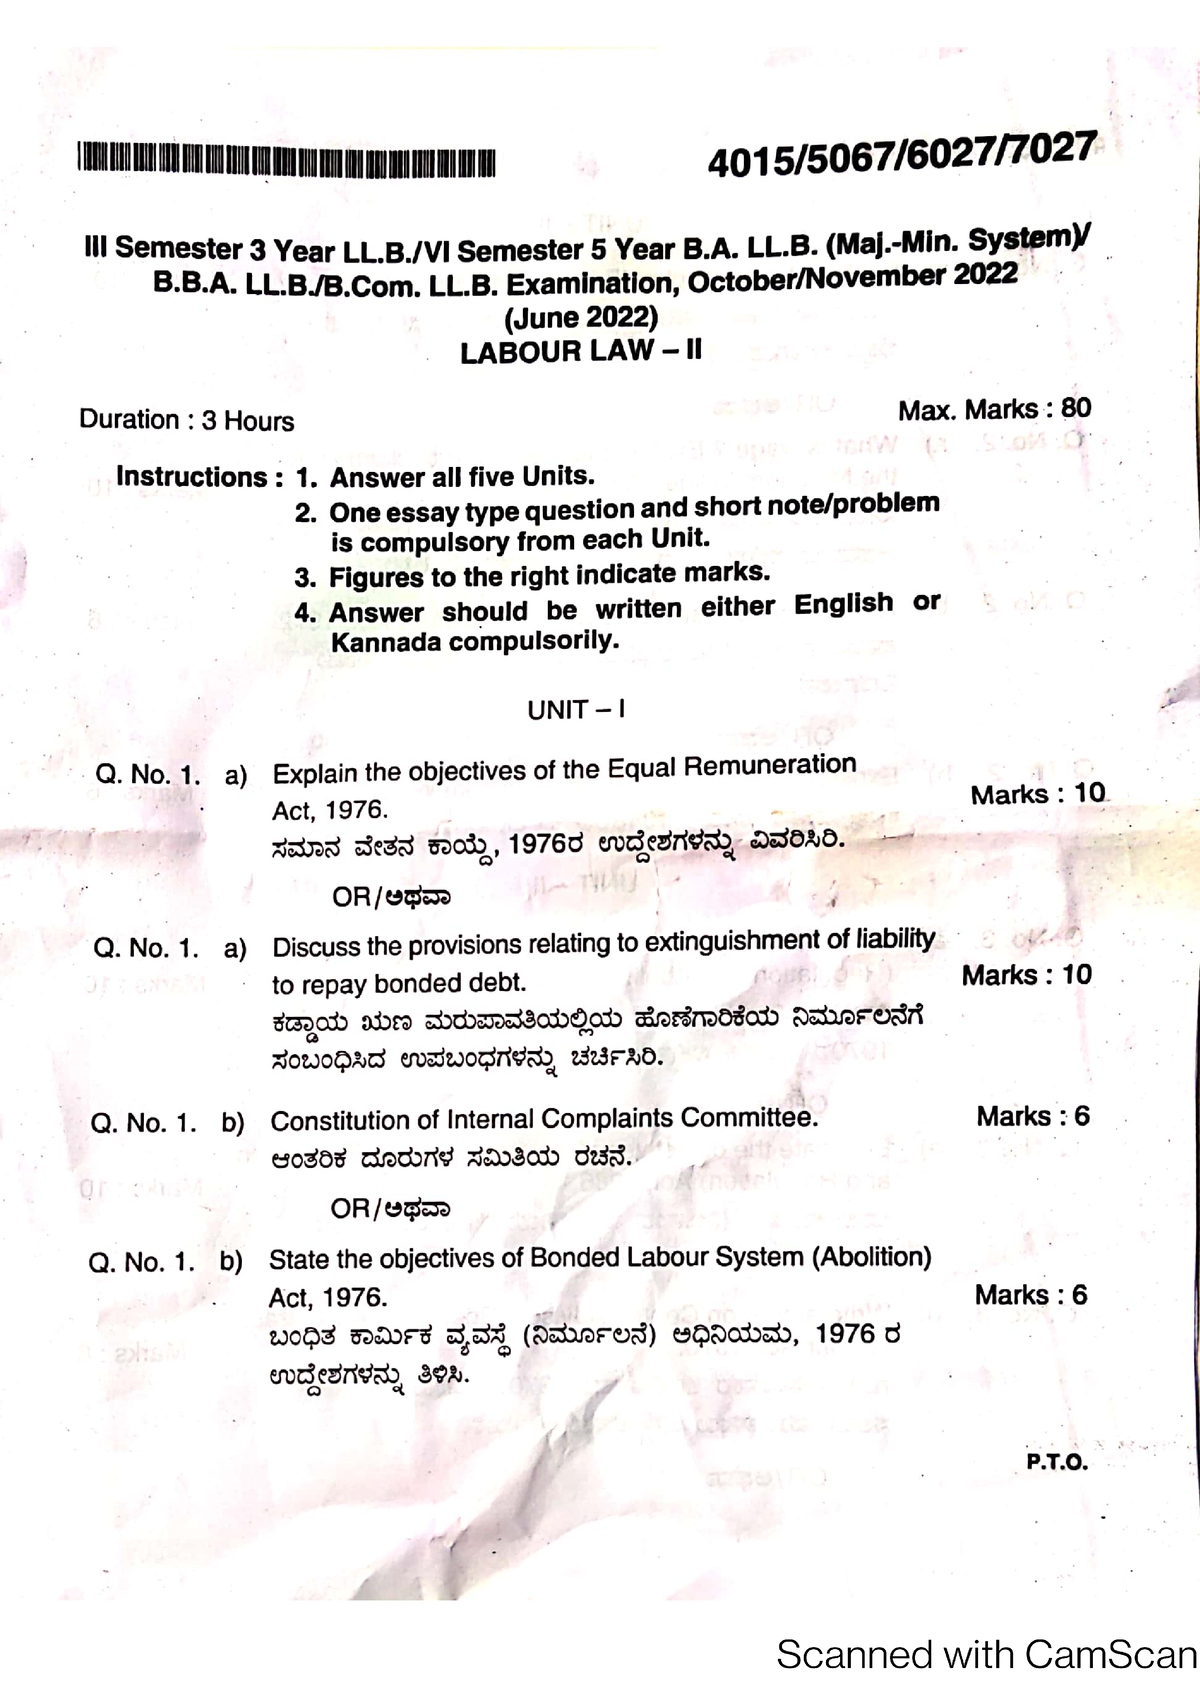 labour law 2 assignment pdf